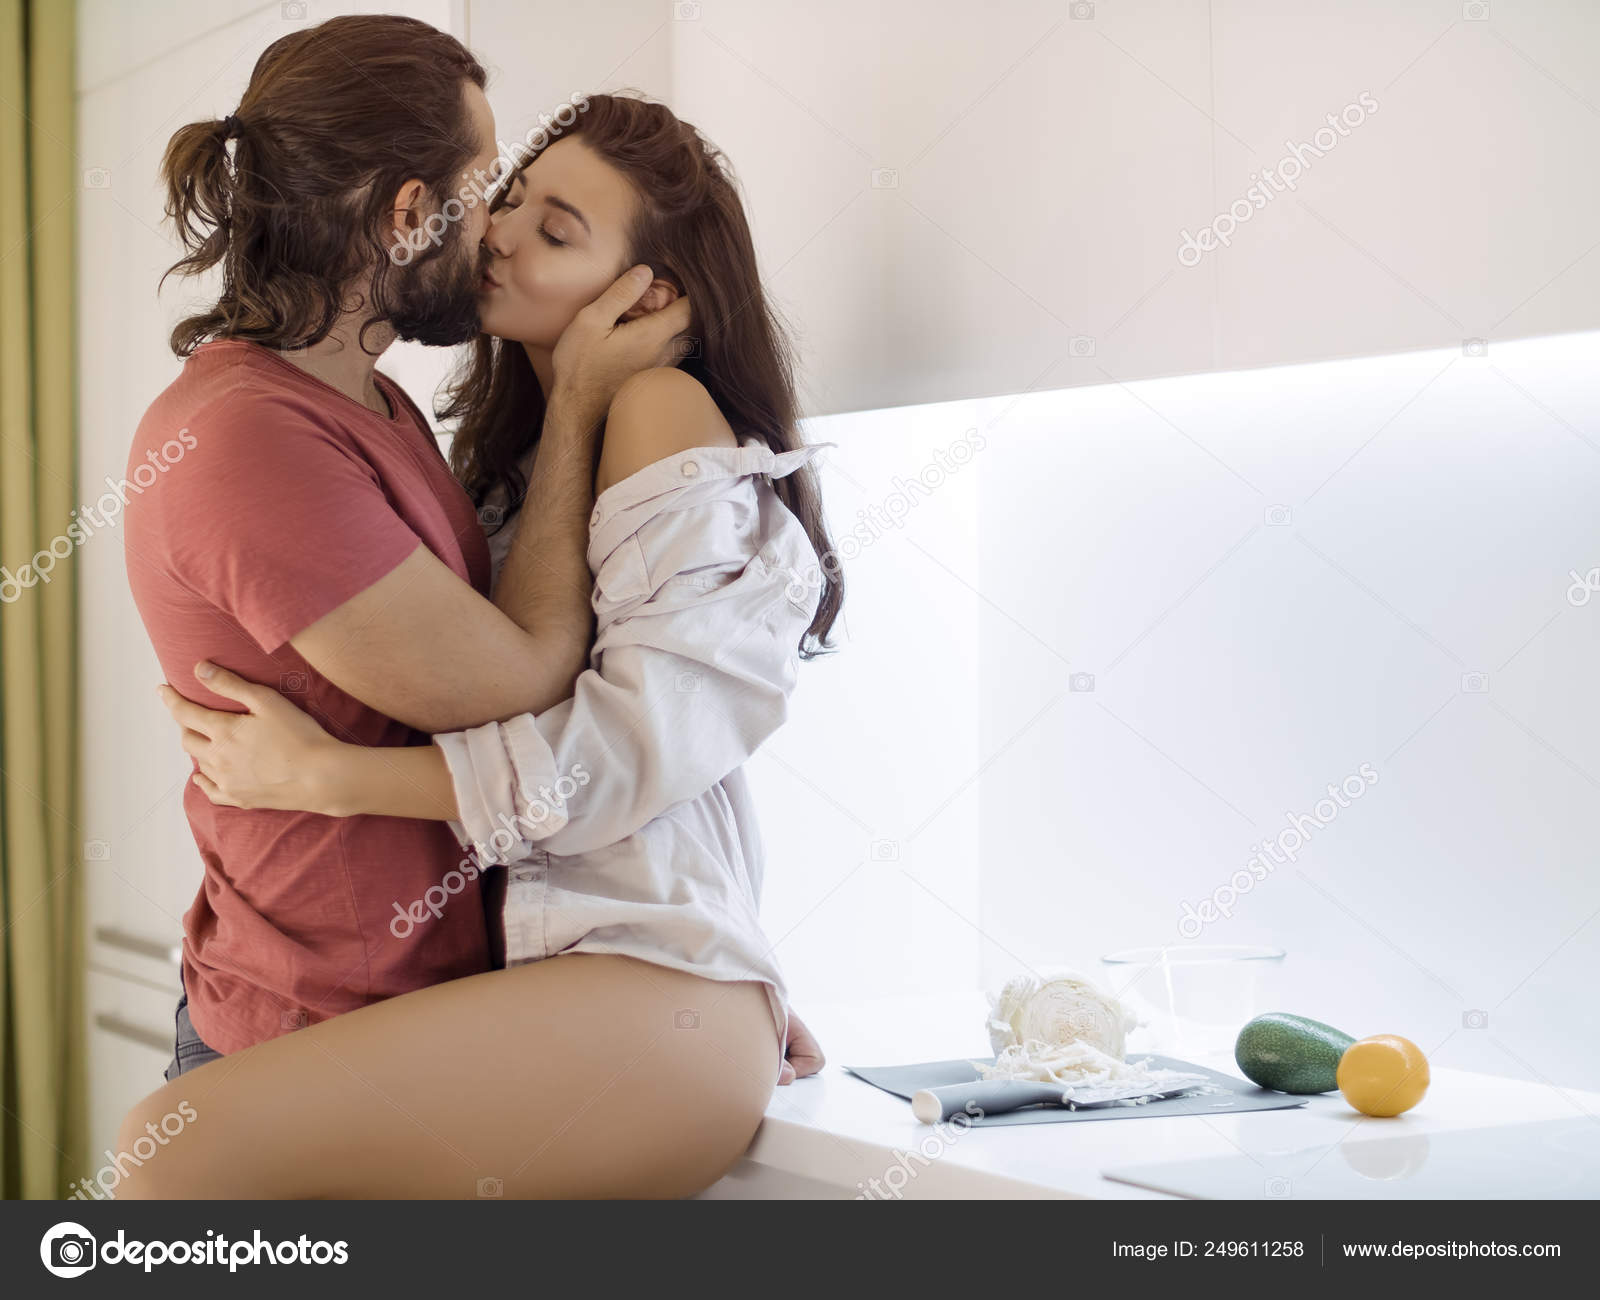 Good morning couple sex